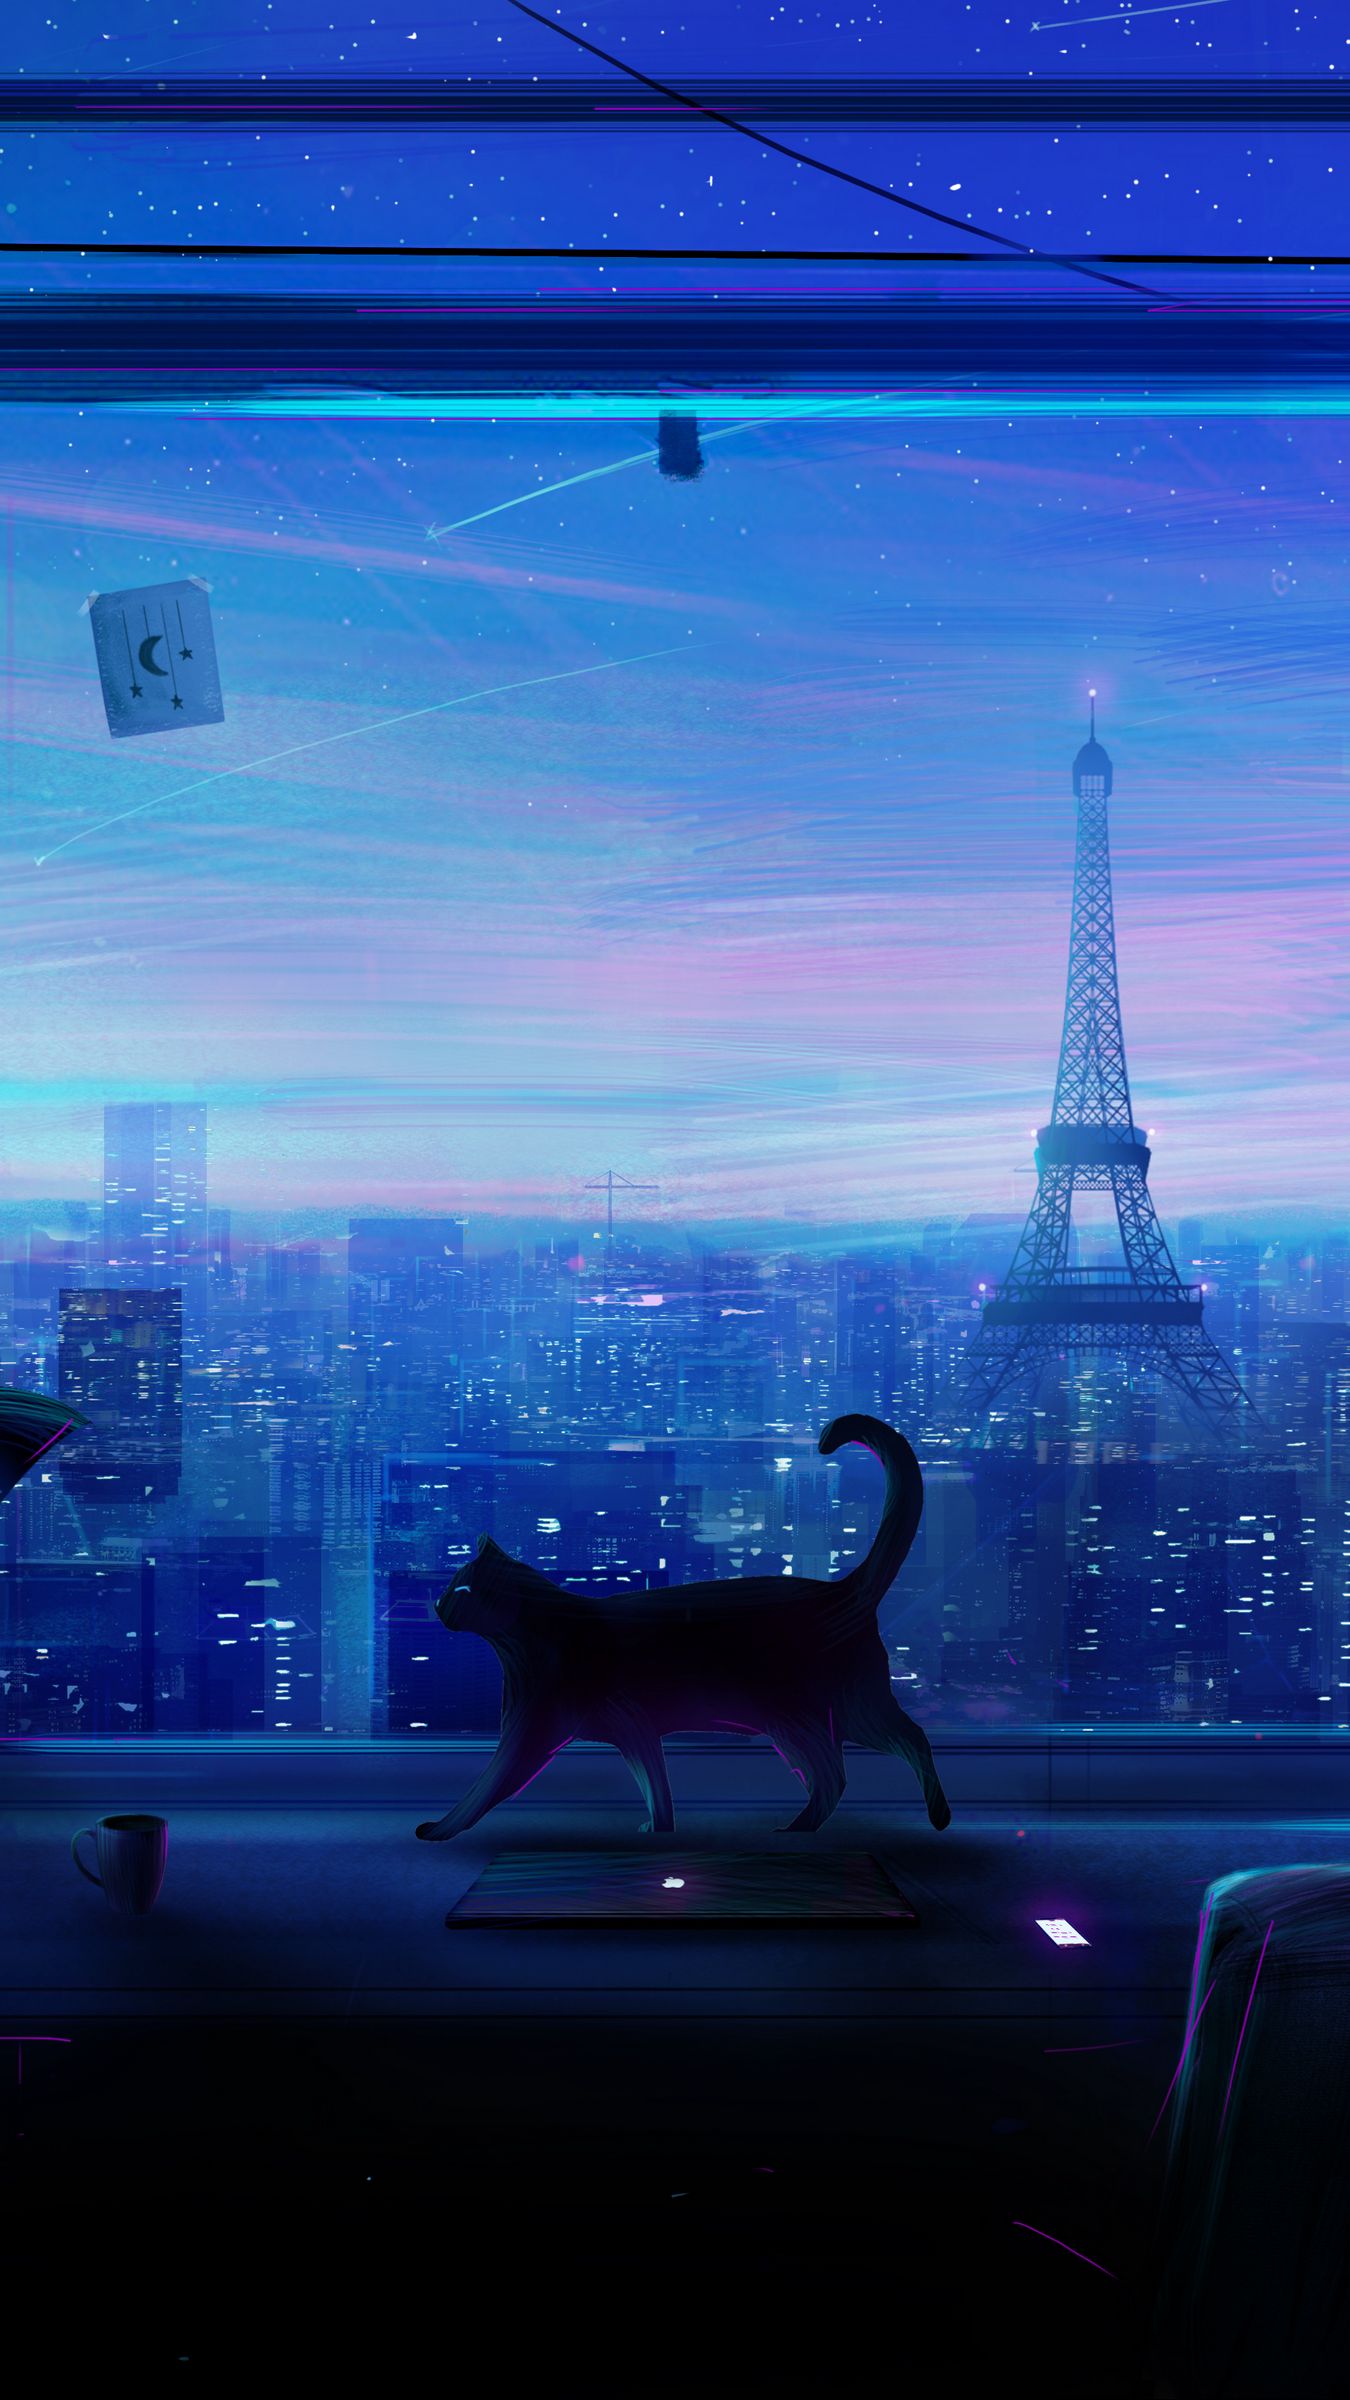 Wallpaper cat, anime, girl images for desktop, section арт - download